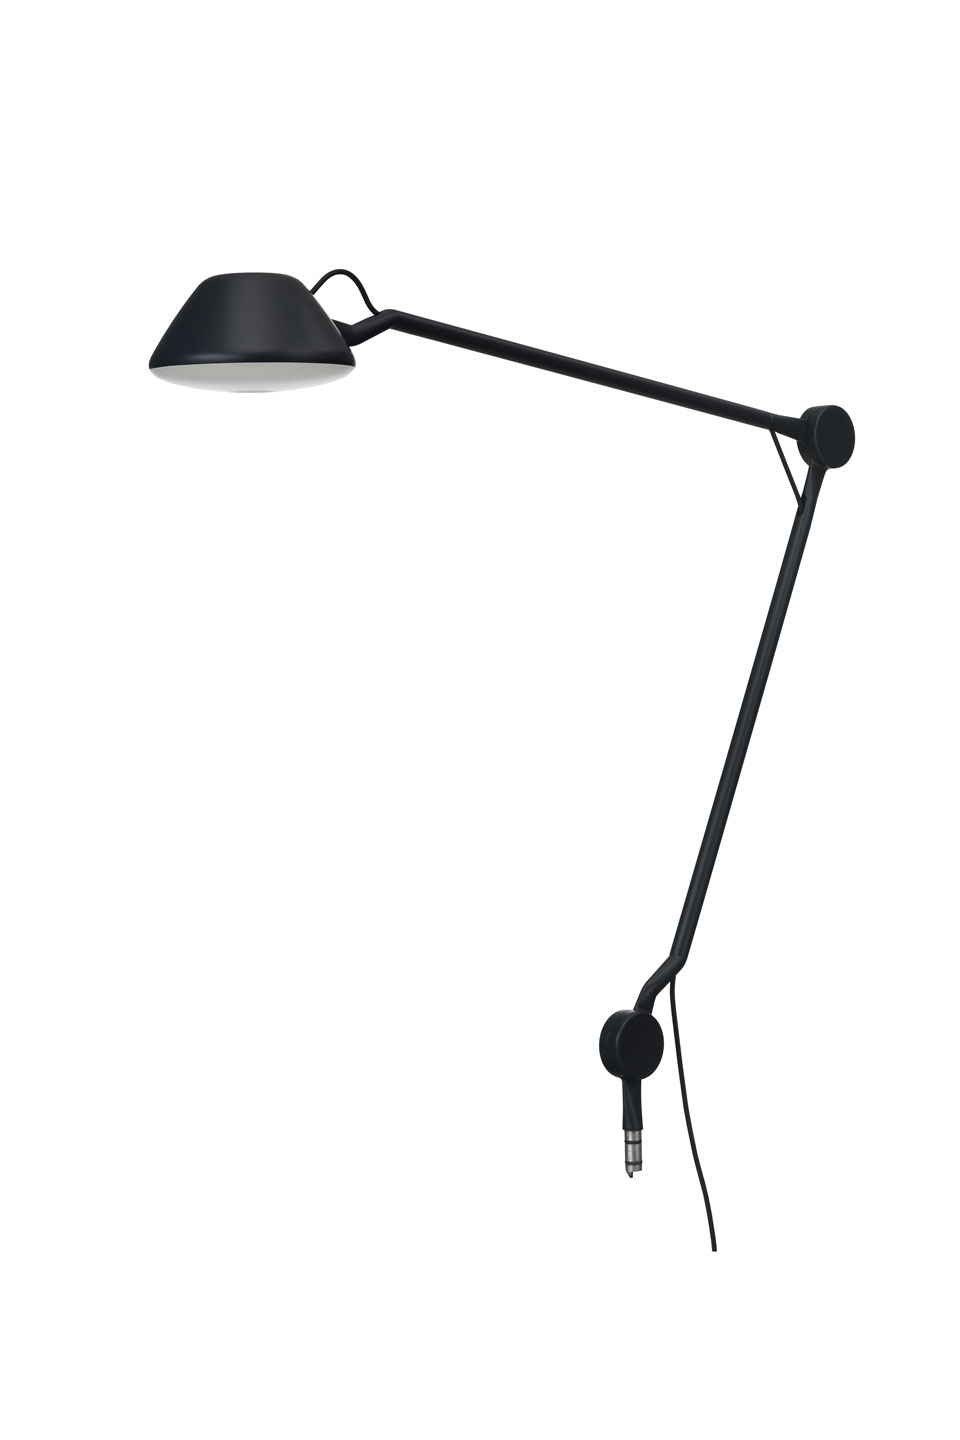 AQ01 lampe de bureau articulée noire plug-in. Fritz Hansen. 